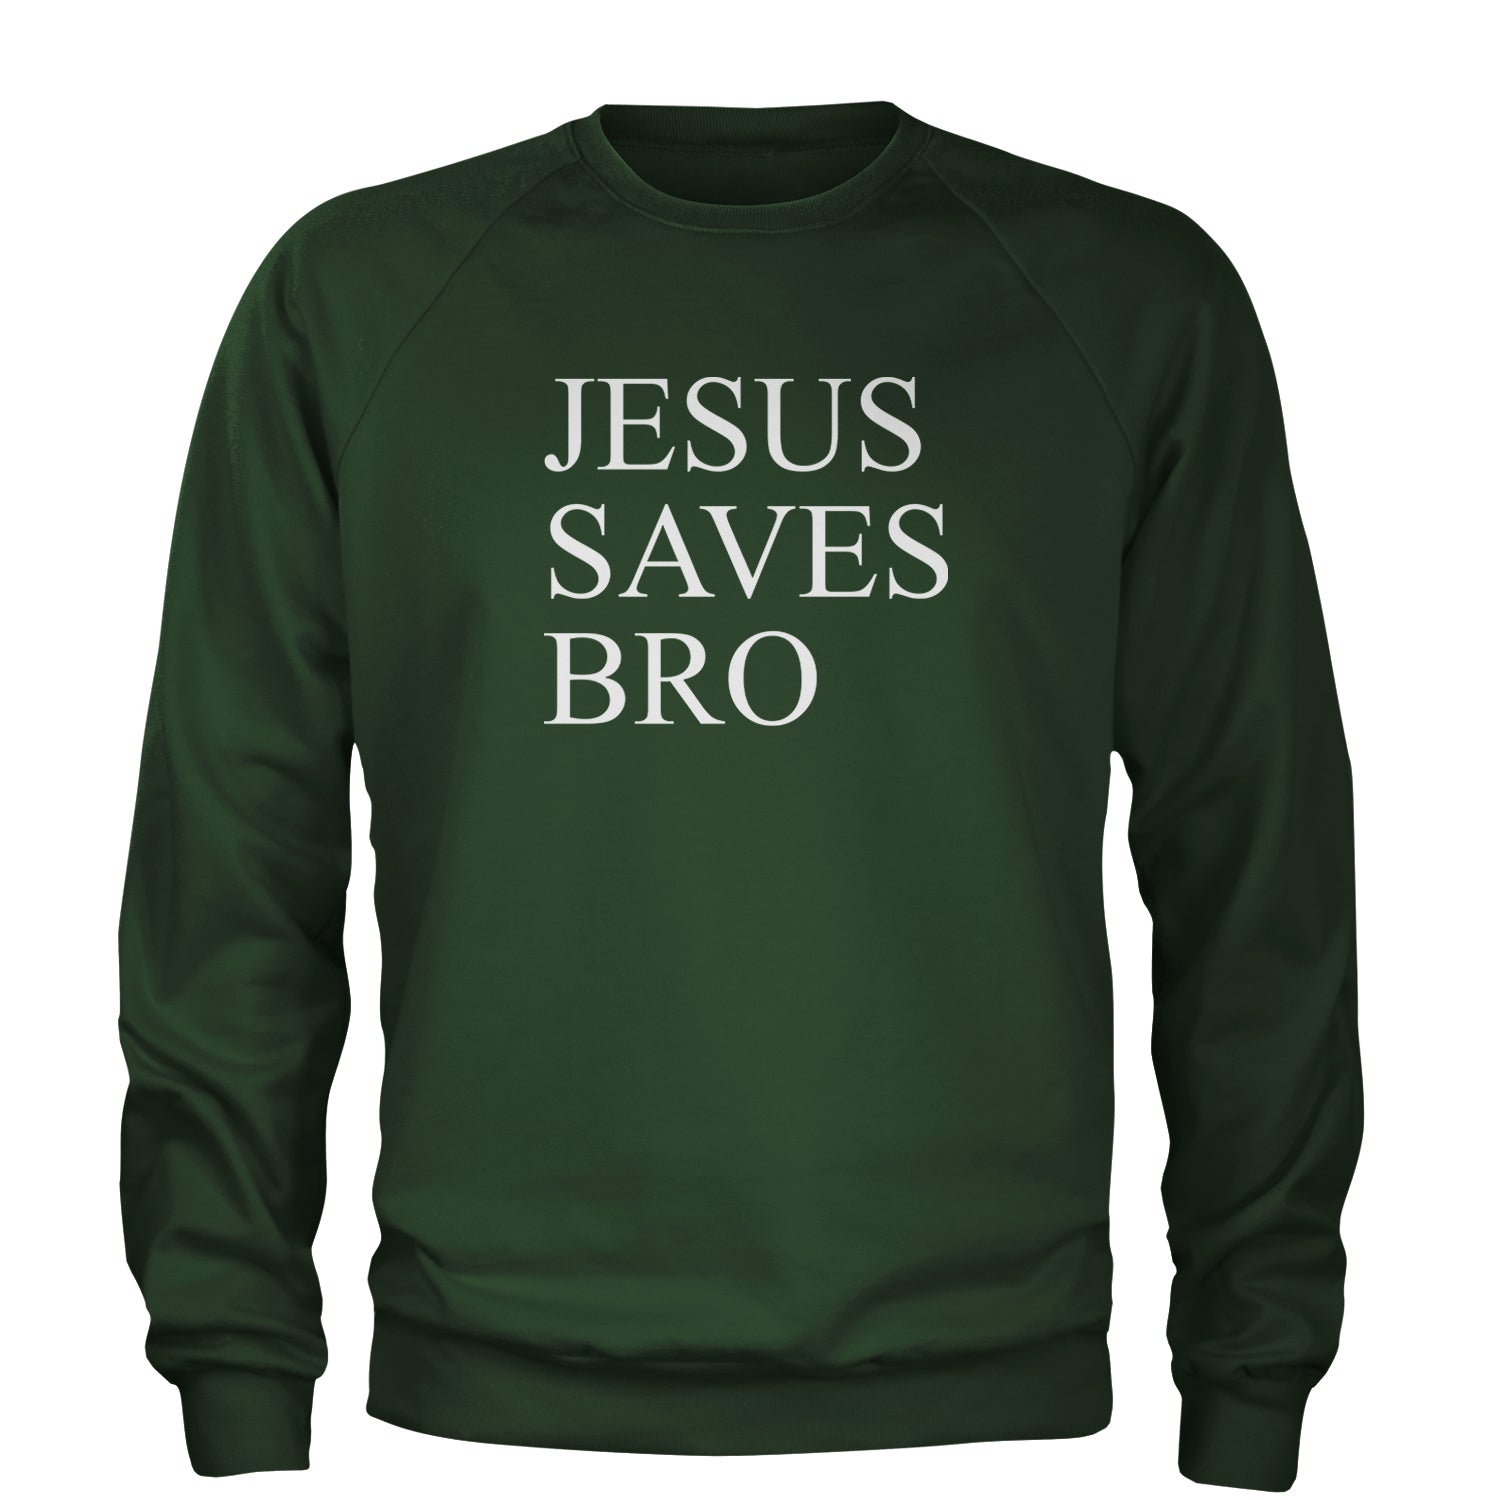 Jesus Saves Bro Adult Crewneck Sweatshirt catholic, christian, christianity, church, jesus, religion, religuous by Expression Tees